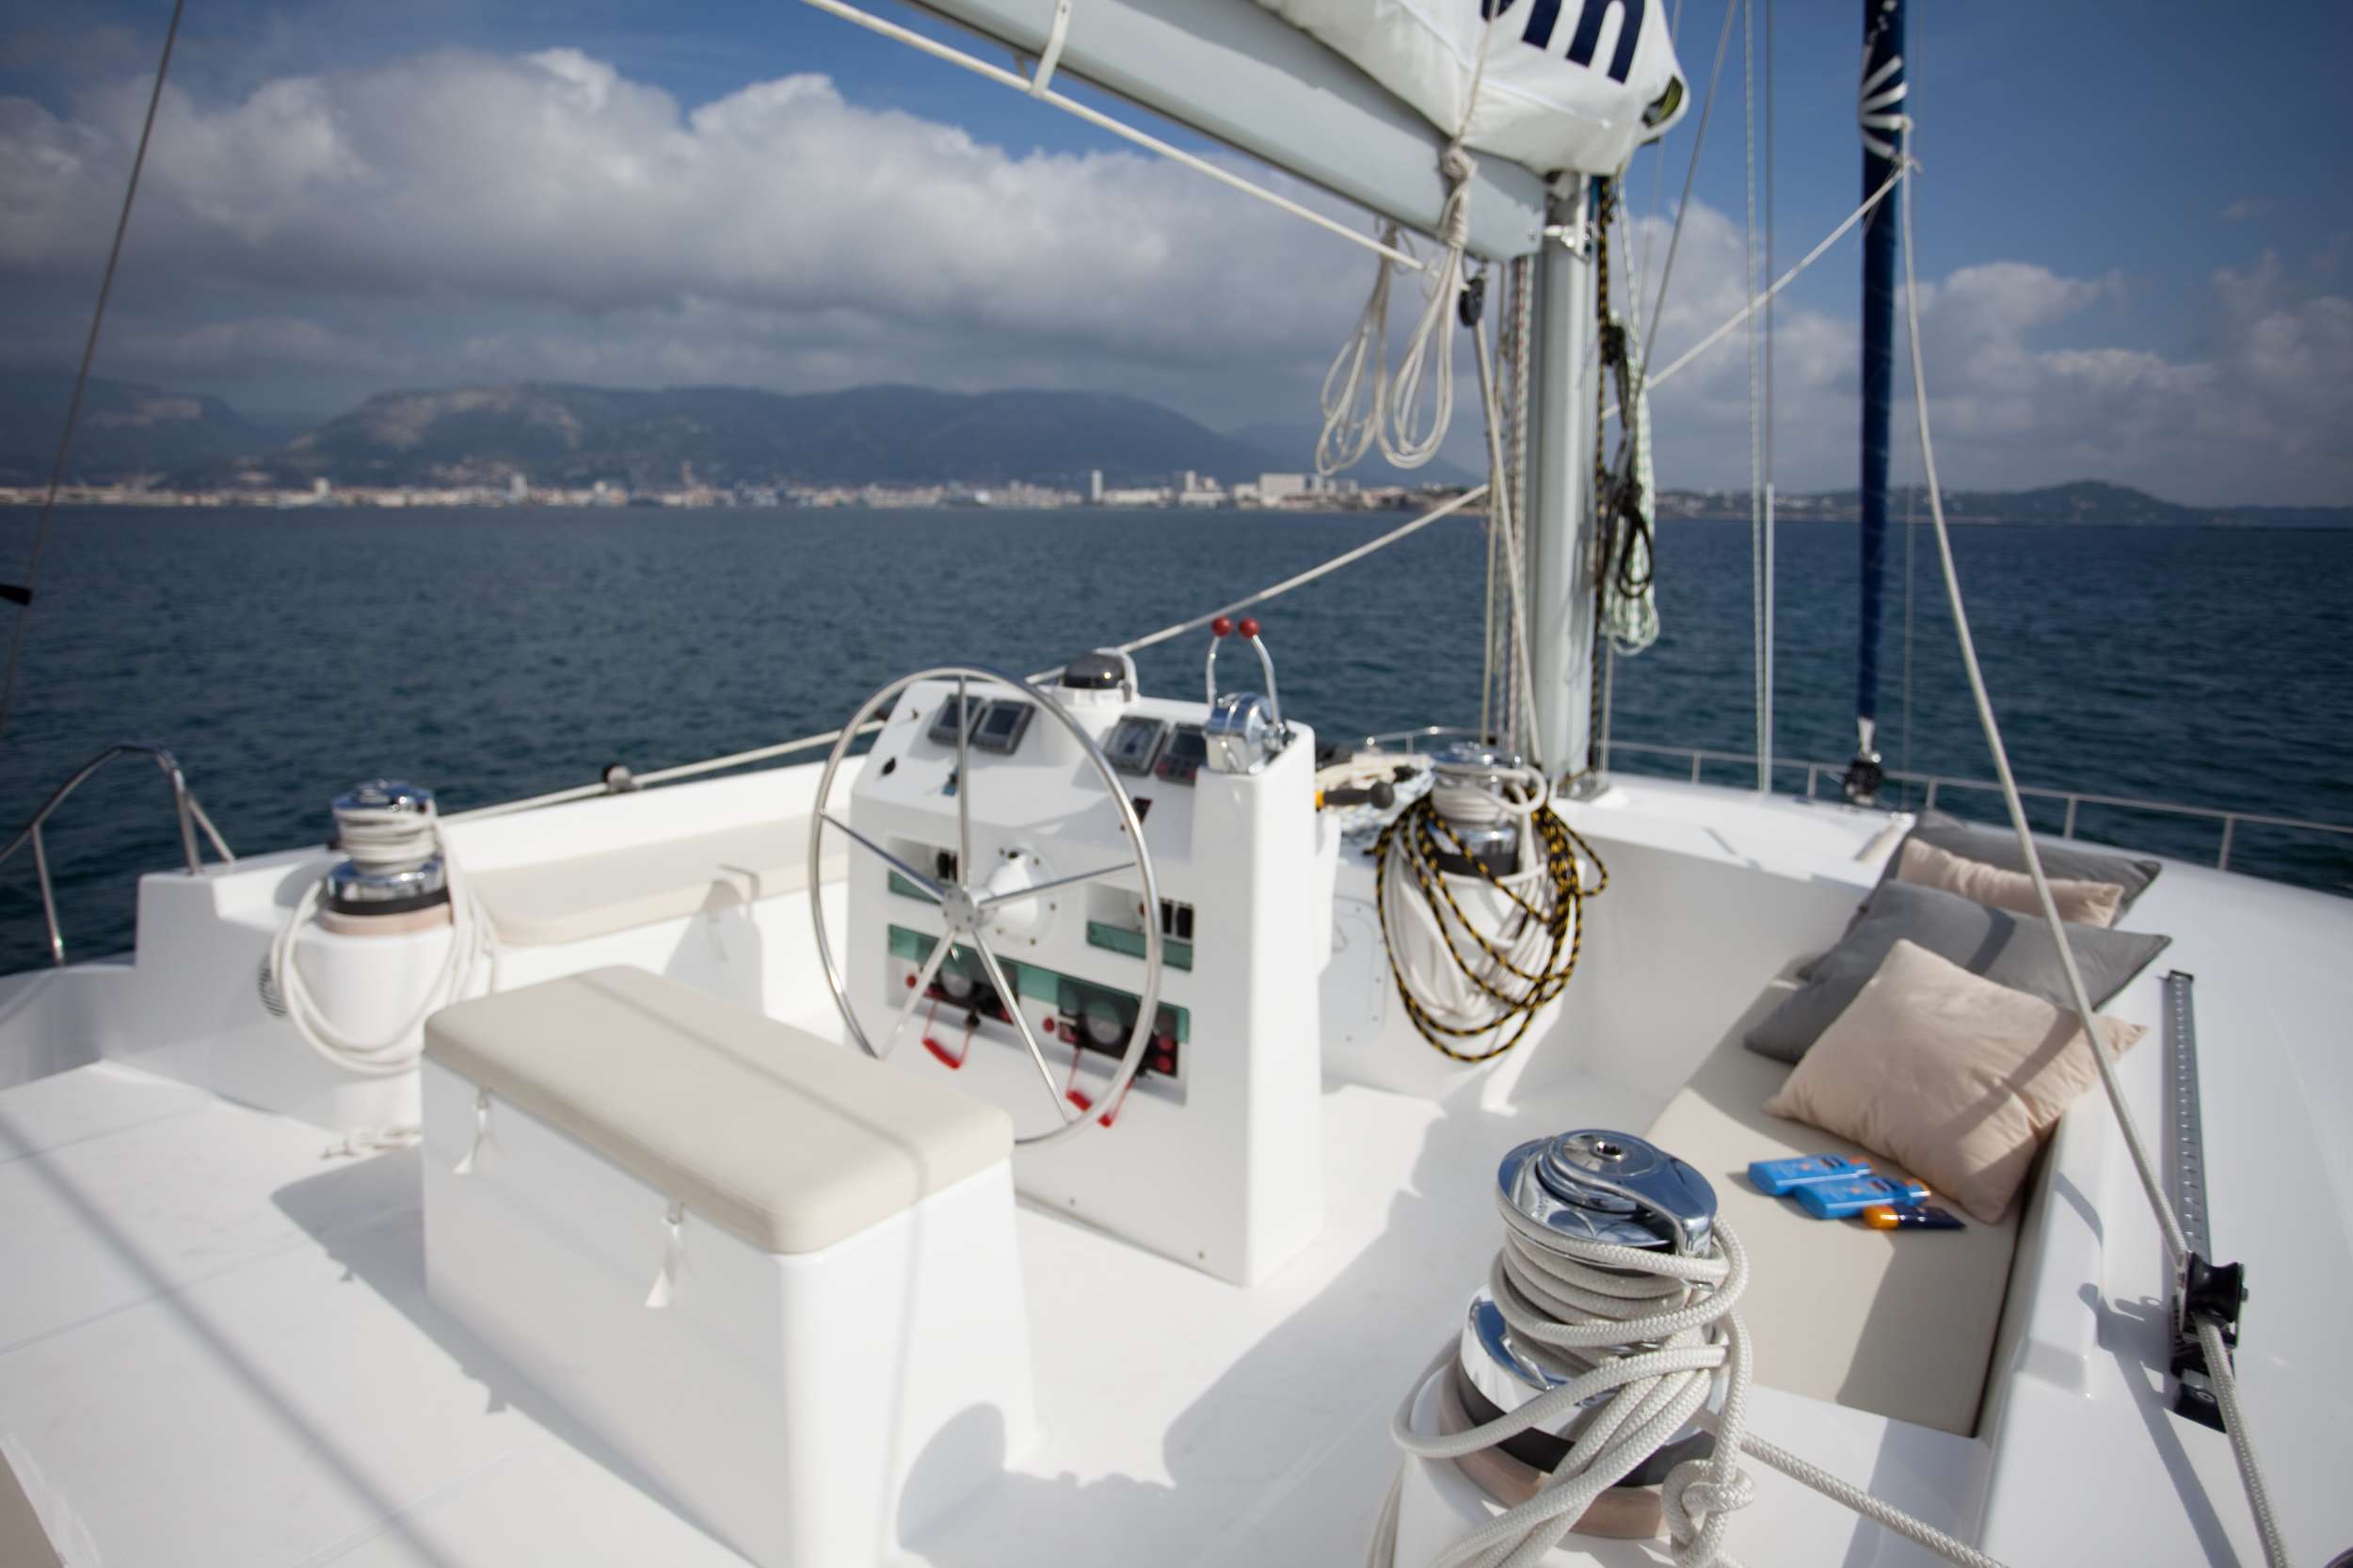 Dream 60 - Littr&eacute; &amp; Tauceti - Yacht Charter Koh Samui & Boat hire in W. Med -Naples/Sicily, W. Med - Spain/Balearics, Croatia Bahamas, Indian Ocean and SE Asia 4